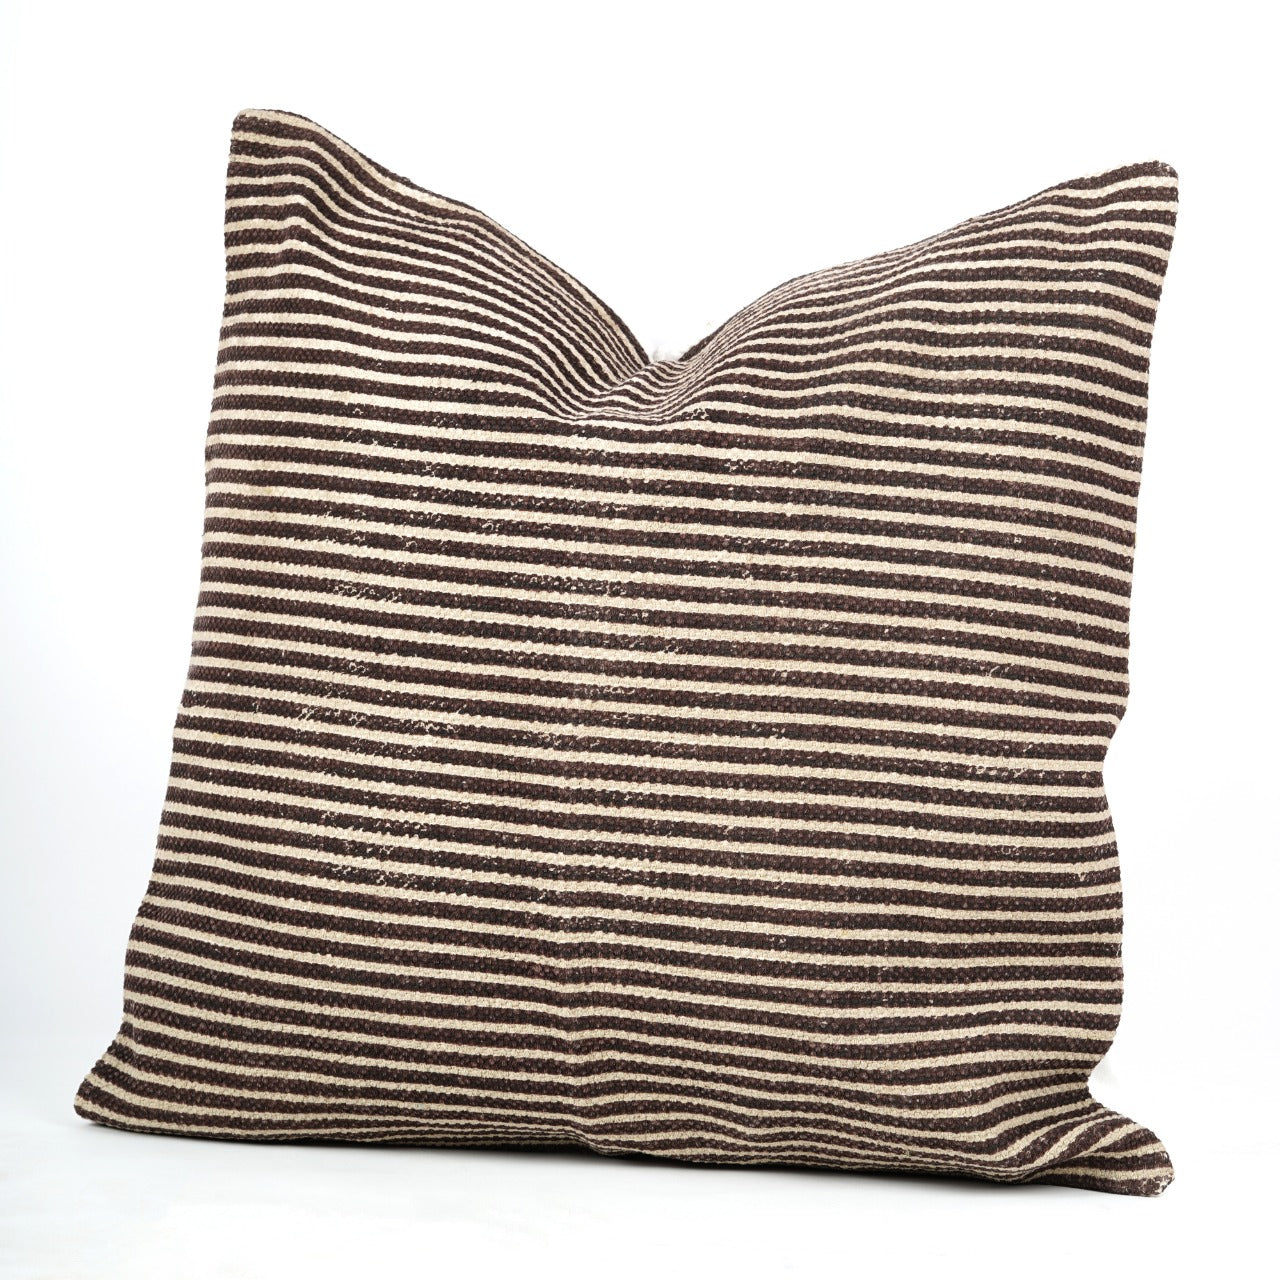 Rug Cushion Cover- Stripes - The Teal Thread